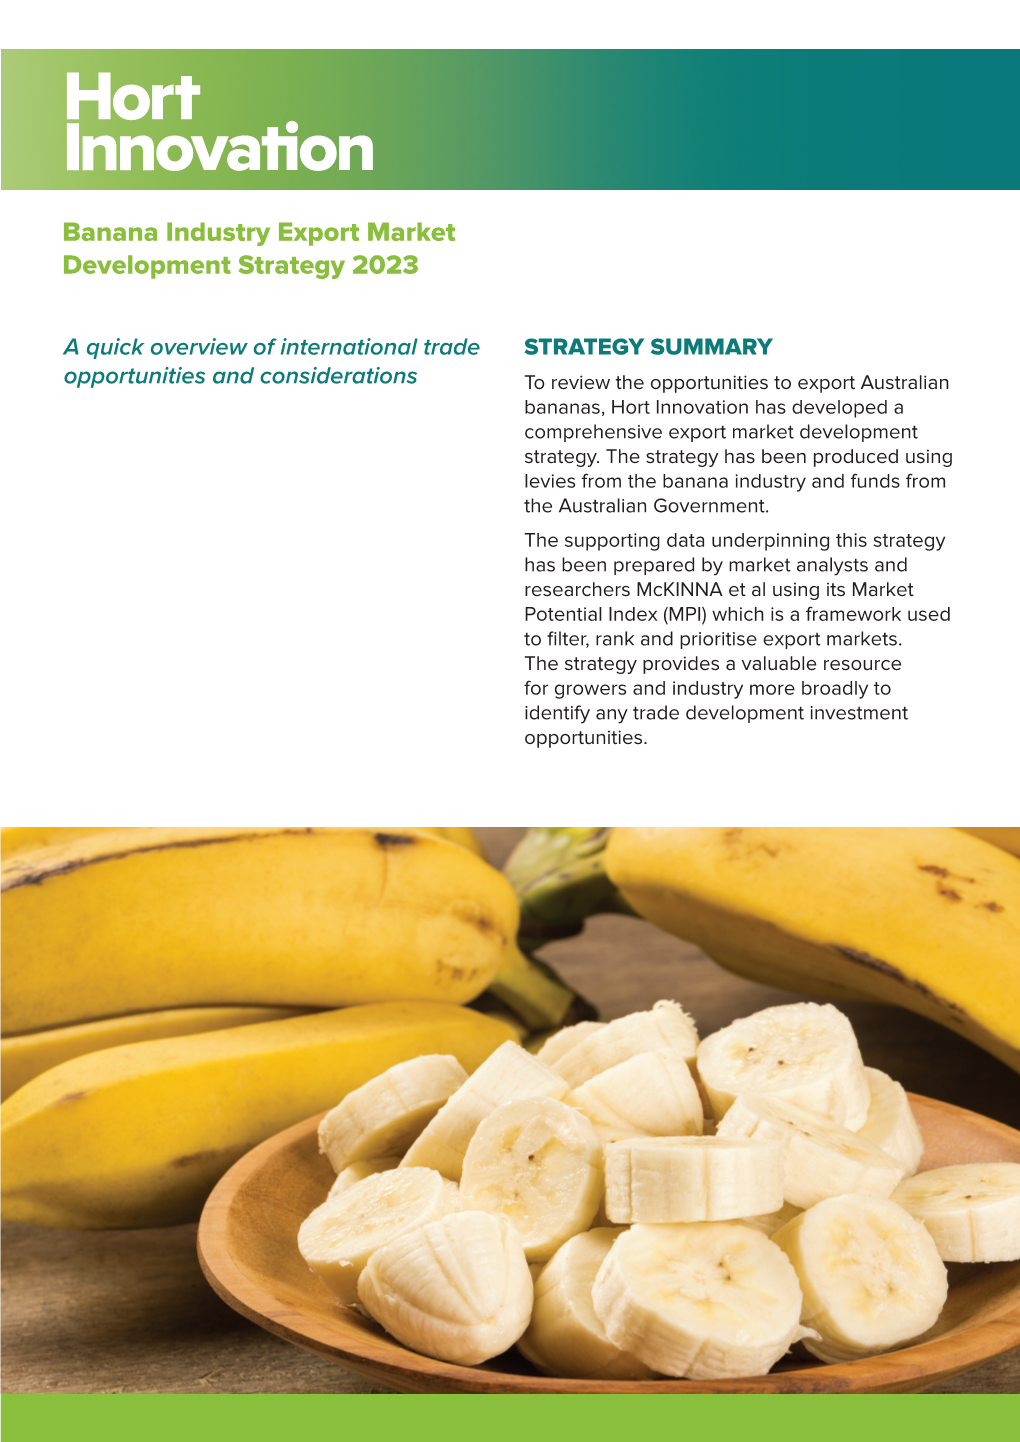 Banana Industry Export Market Development Strategy 2023